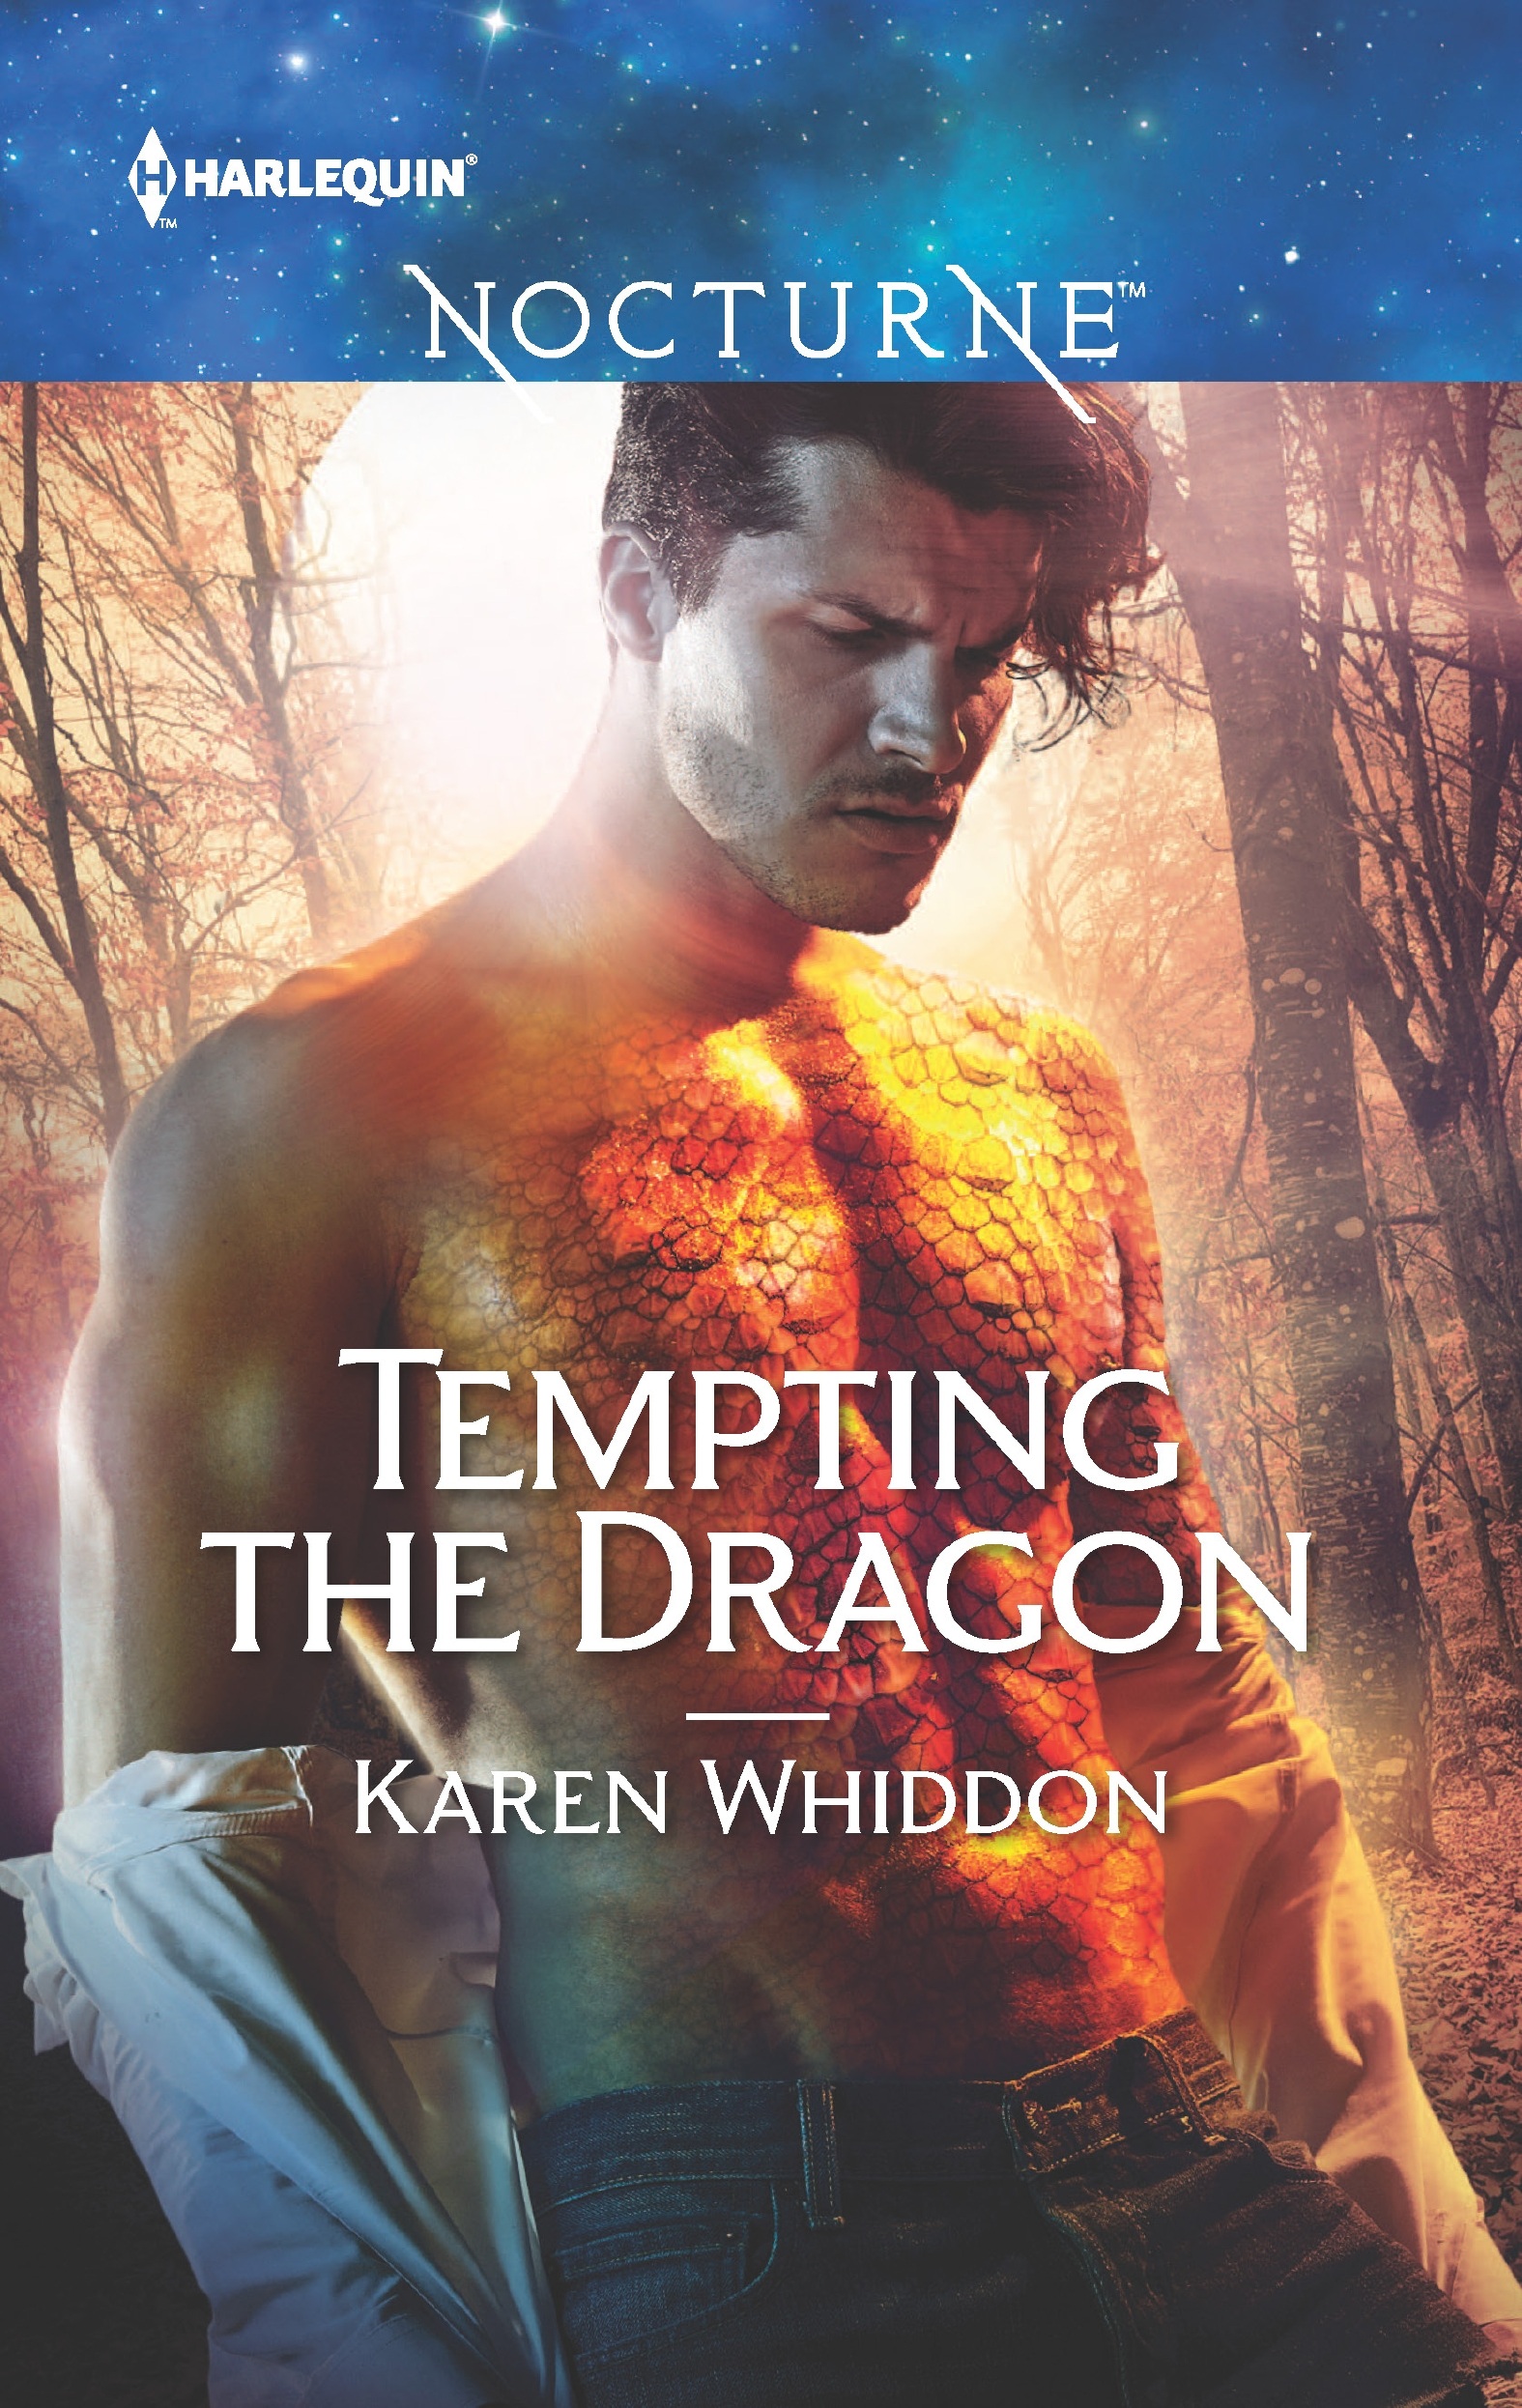 Tempting the Dragon (2016) by Karen Whiddon